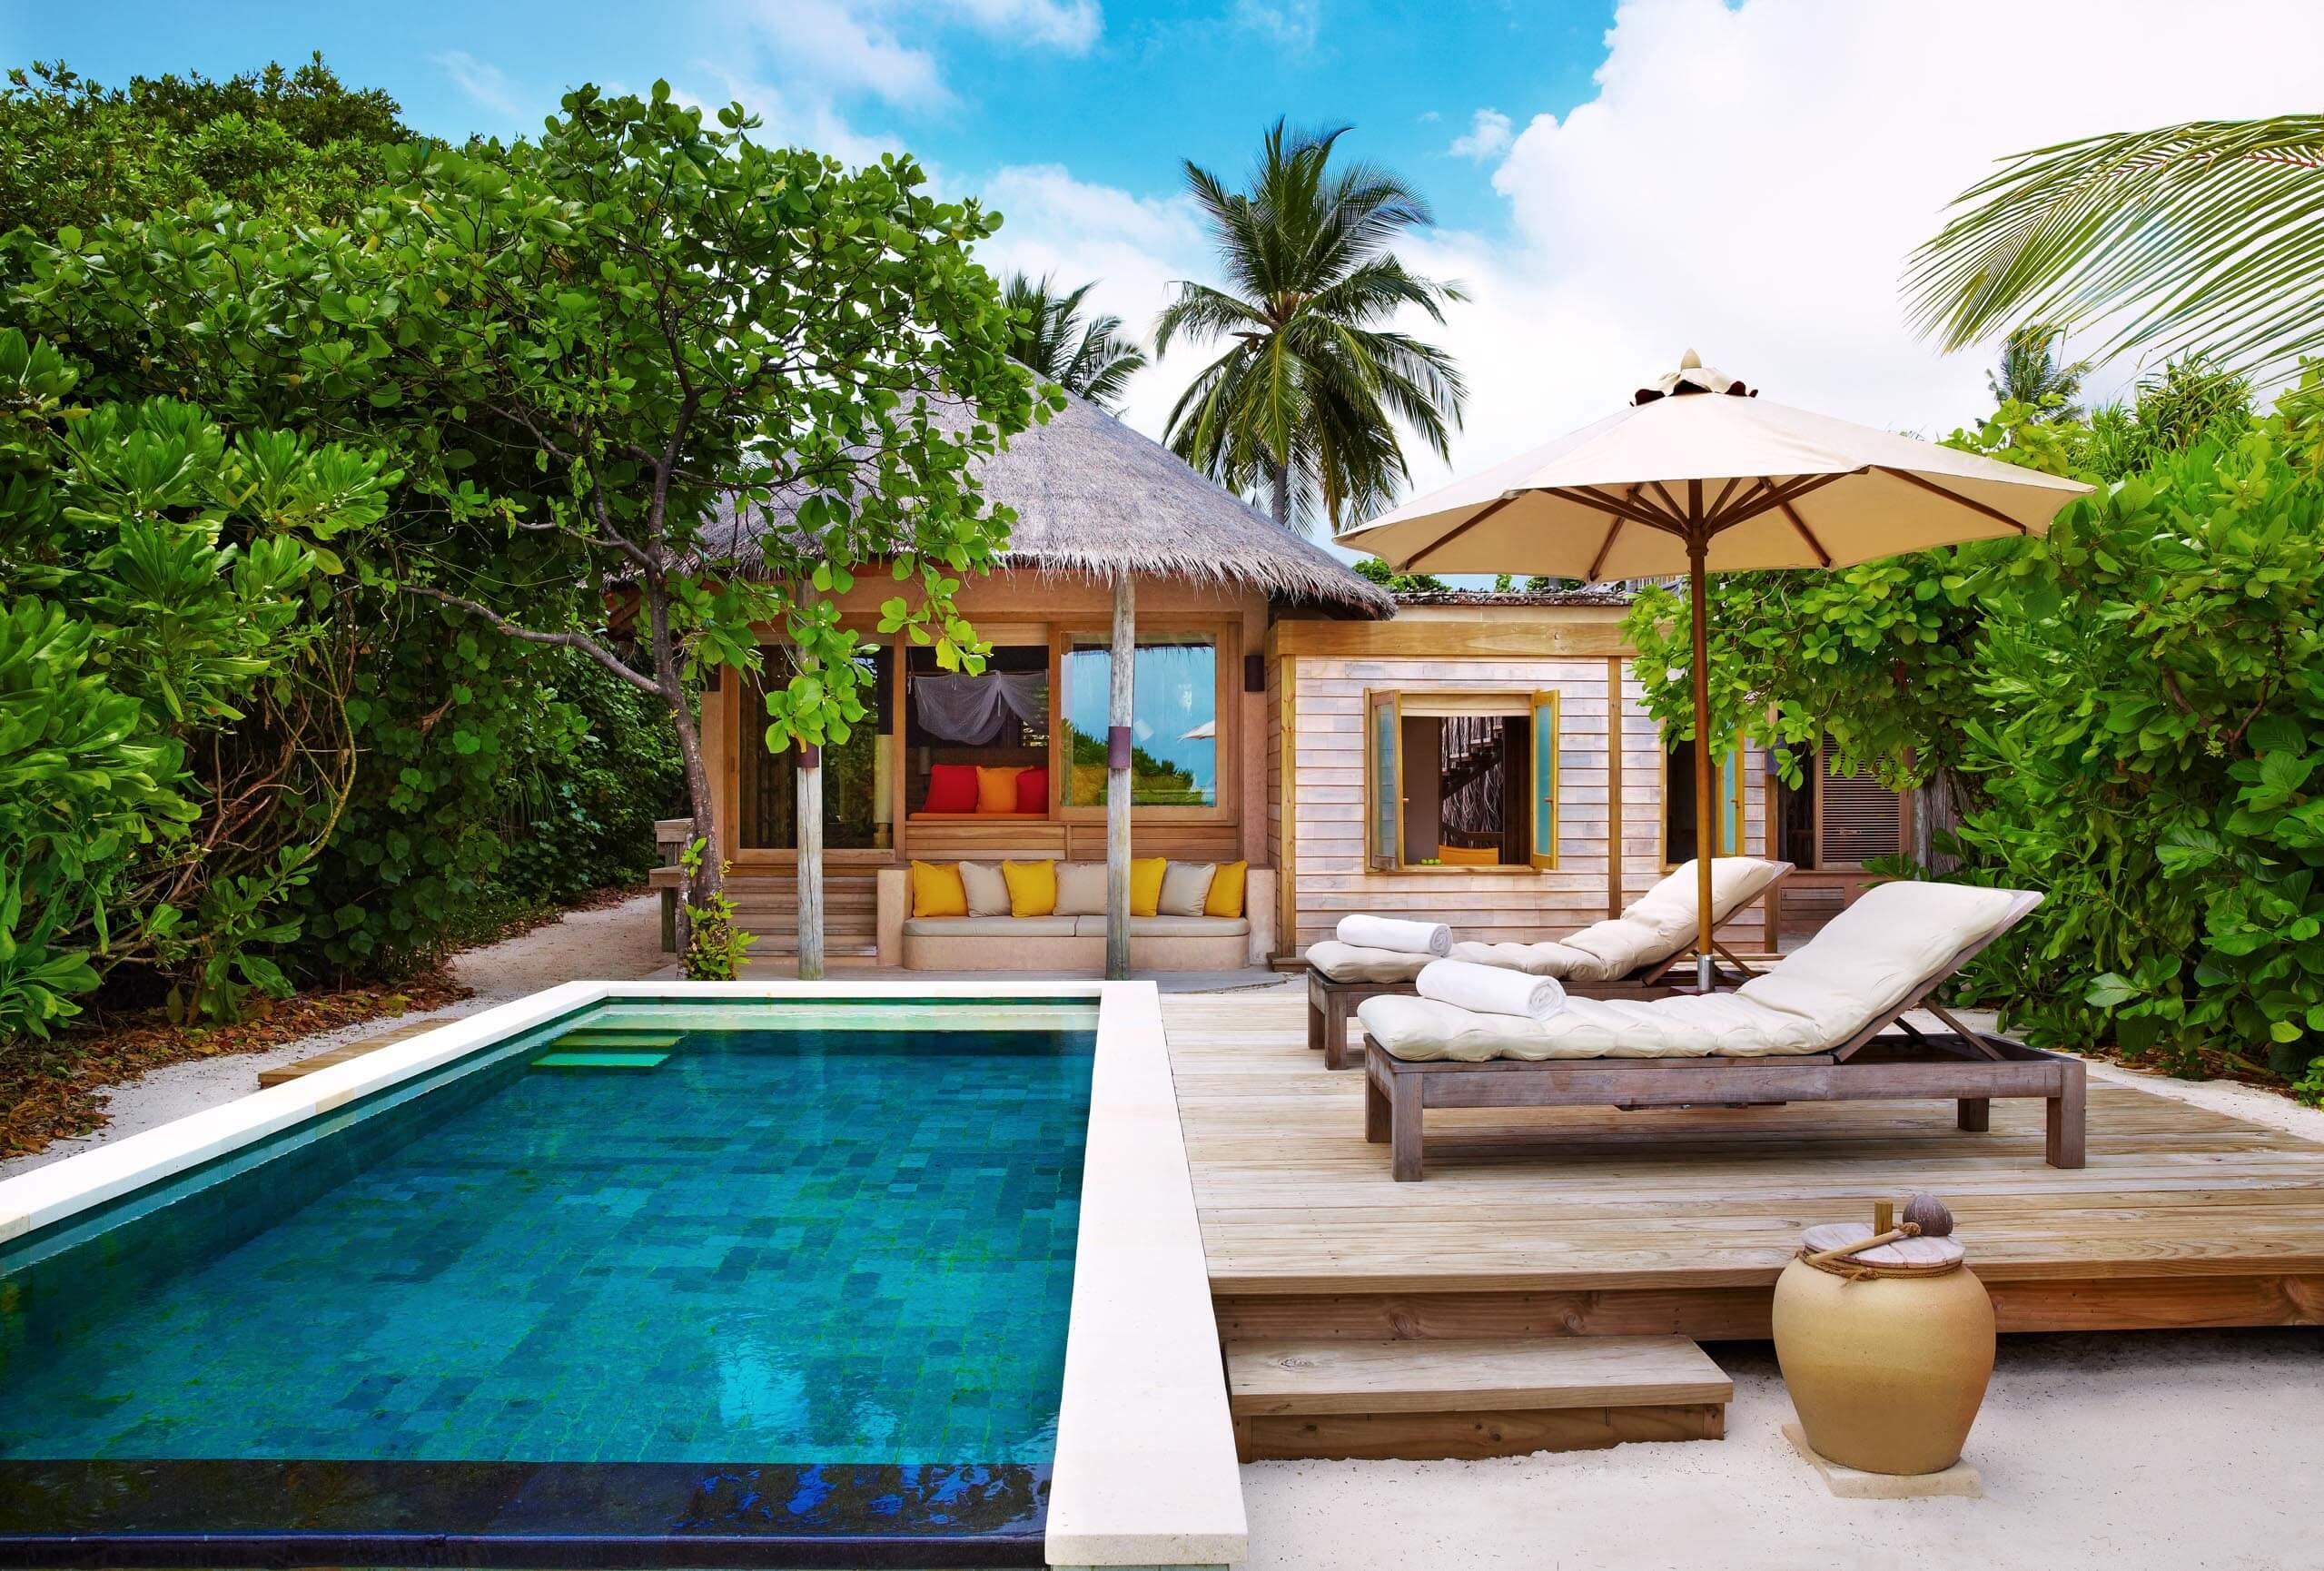 Вилла на мальдивах. Six senses Laamu 5 Мальдивы. Ocean Beach Villa with Pool Six senses Laamu. Лааму Атолл Мальдивы. Six senses Laamu 5* Deluxe (Laamu Atoll).